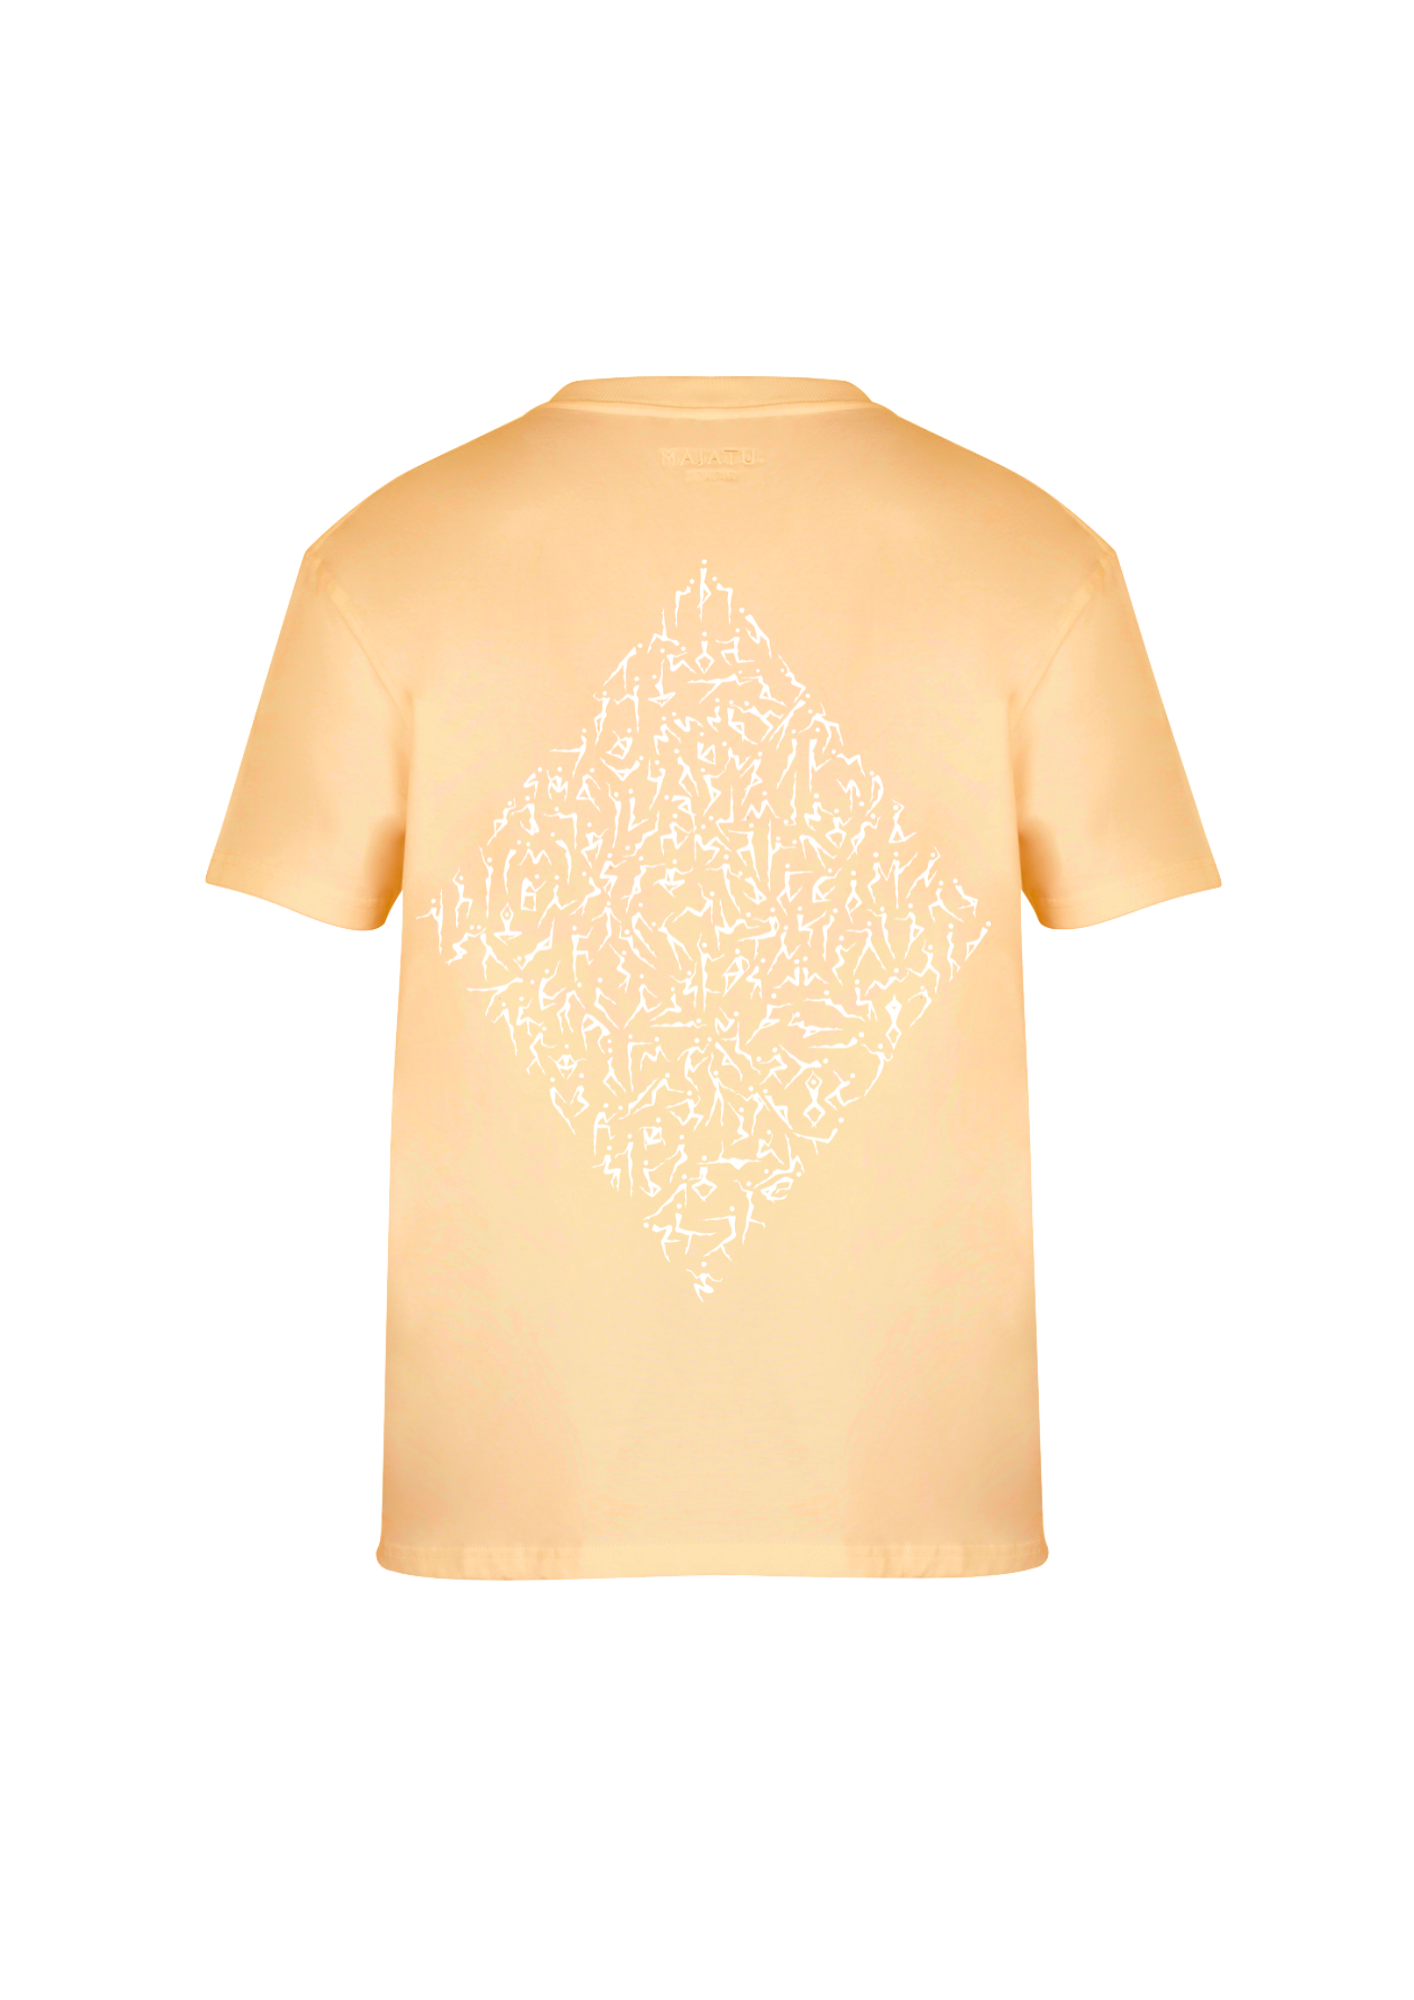 VANDA ORANGE T-shirt